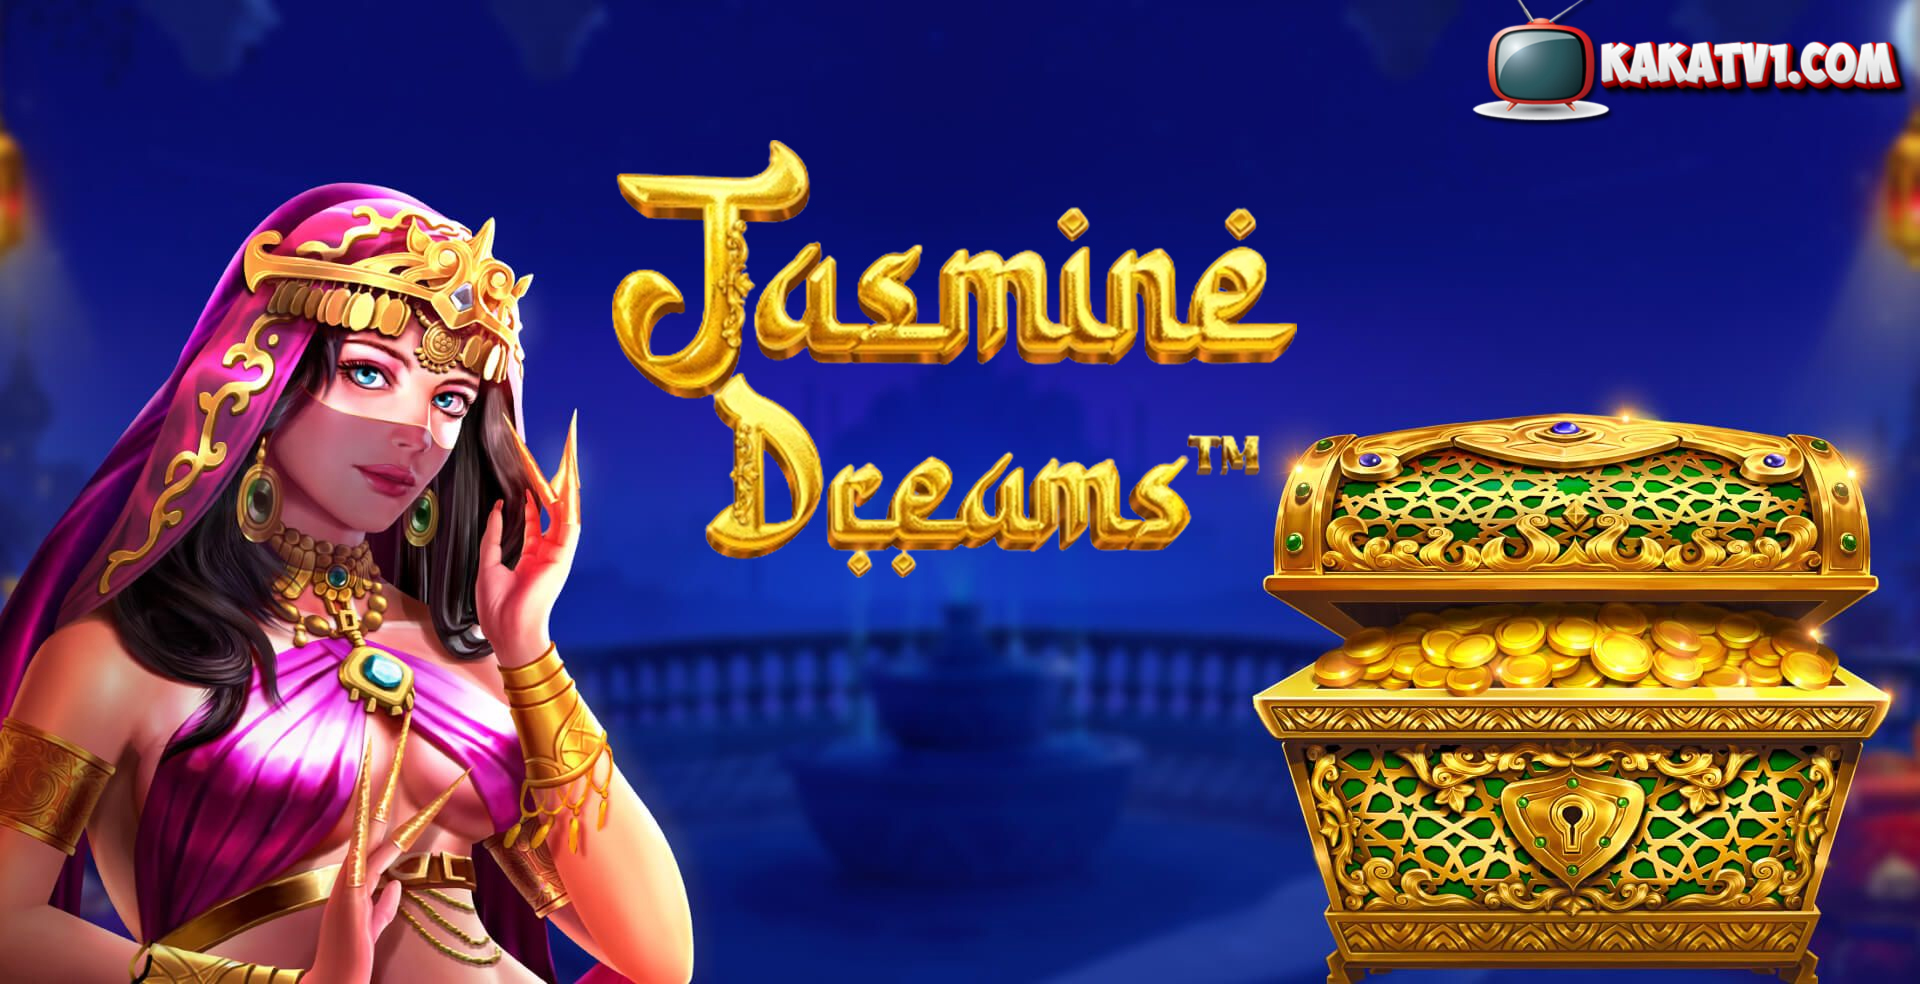 Jasmine Dreams Pragmatic